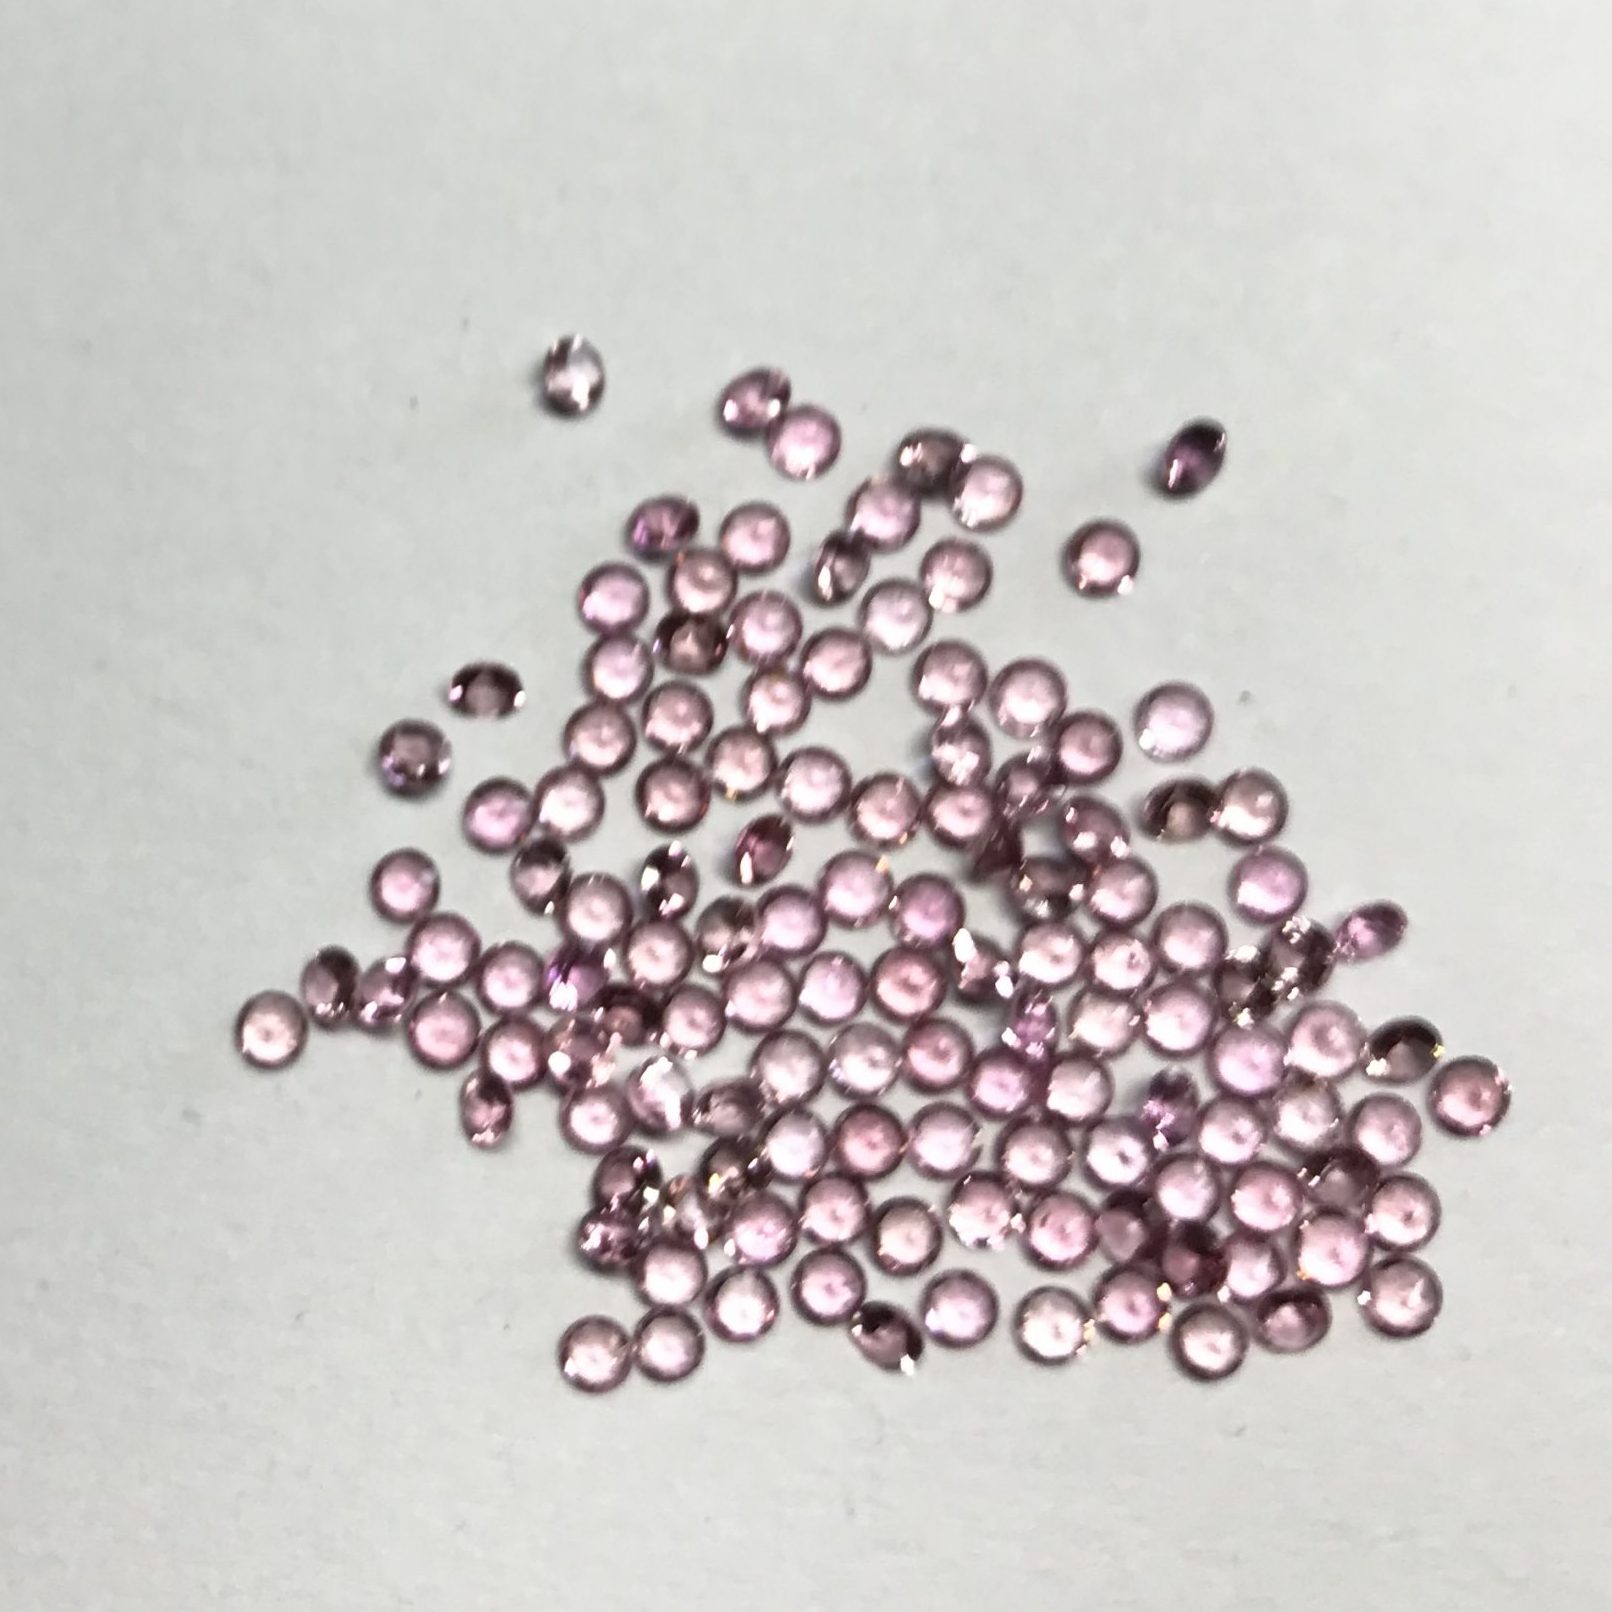 2mm Natural Pink Tourmaline Round Faceted Gemstone